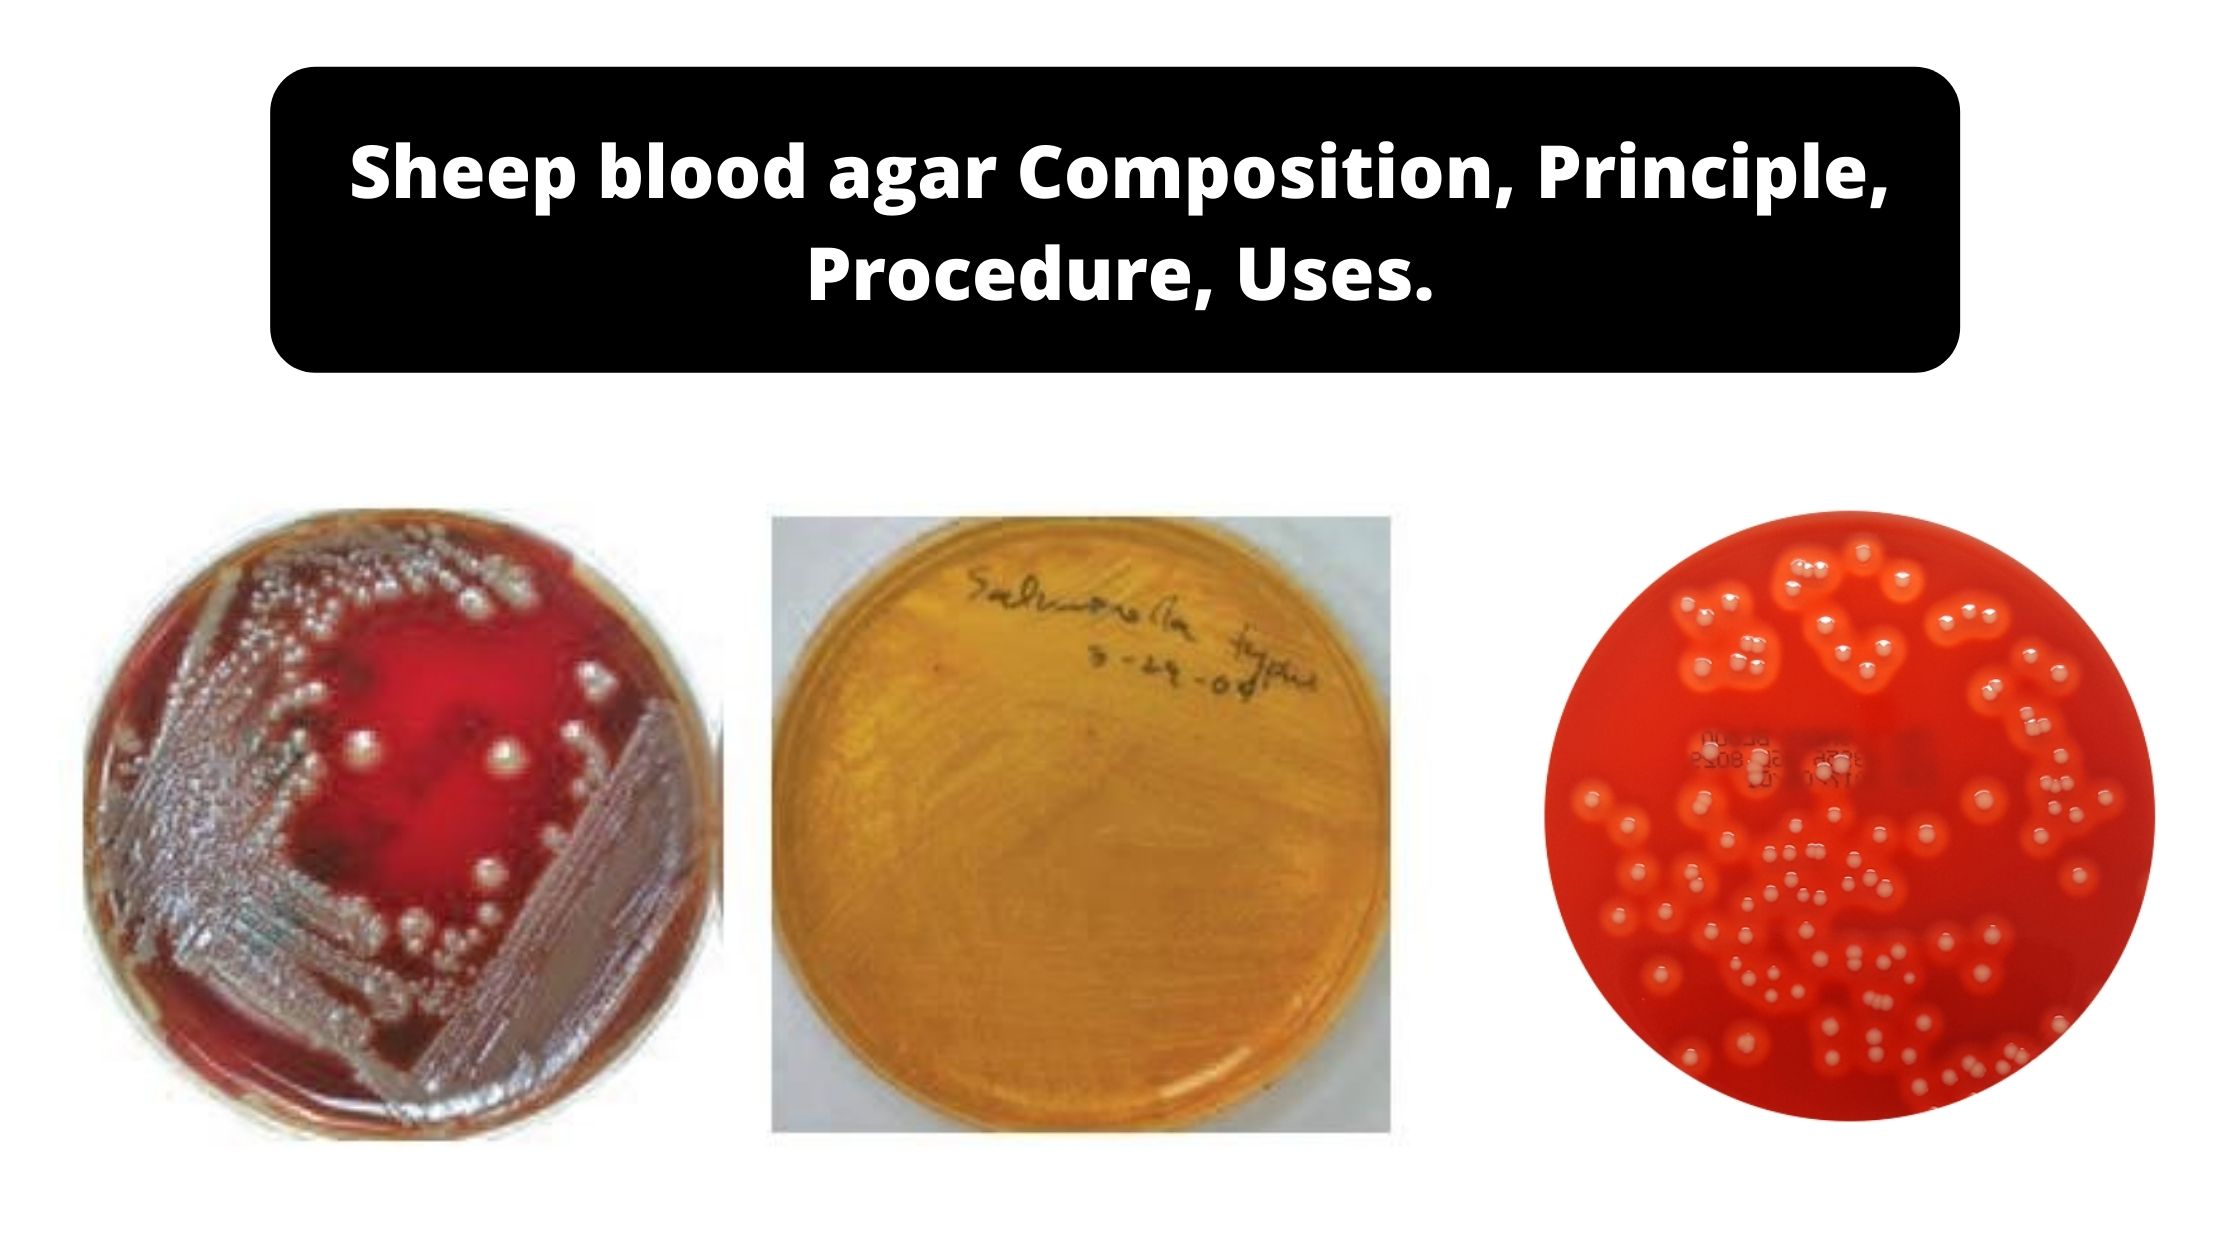 Sheep blood agar Composition, Principle, Procedure, Uses.